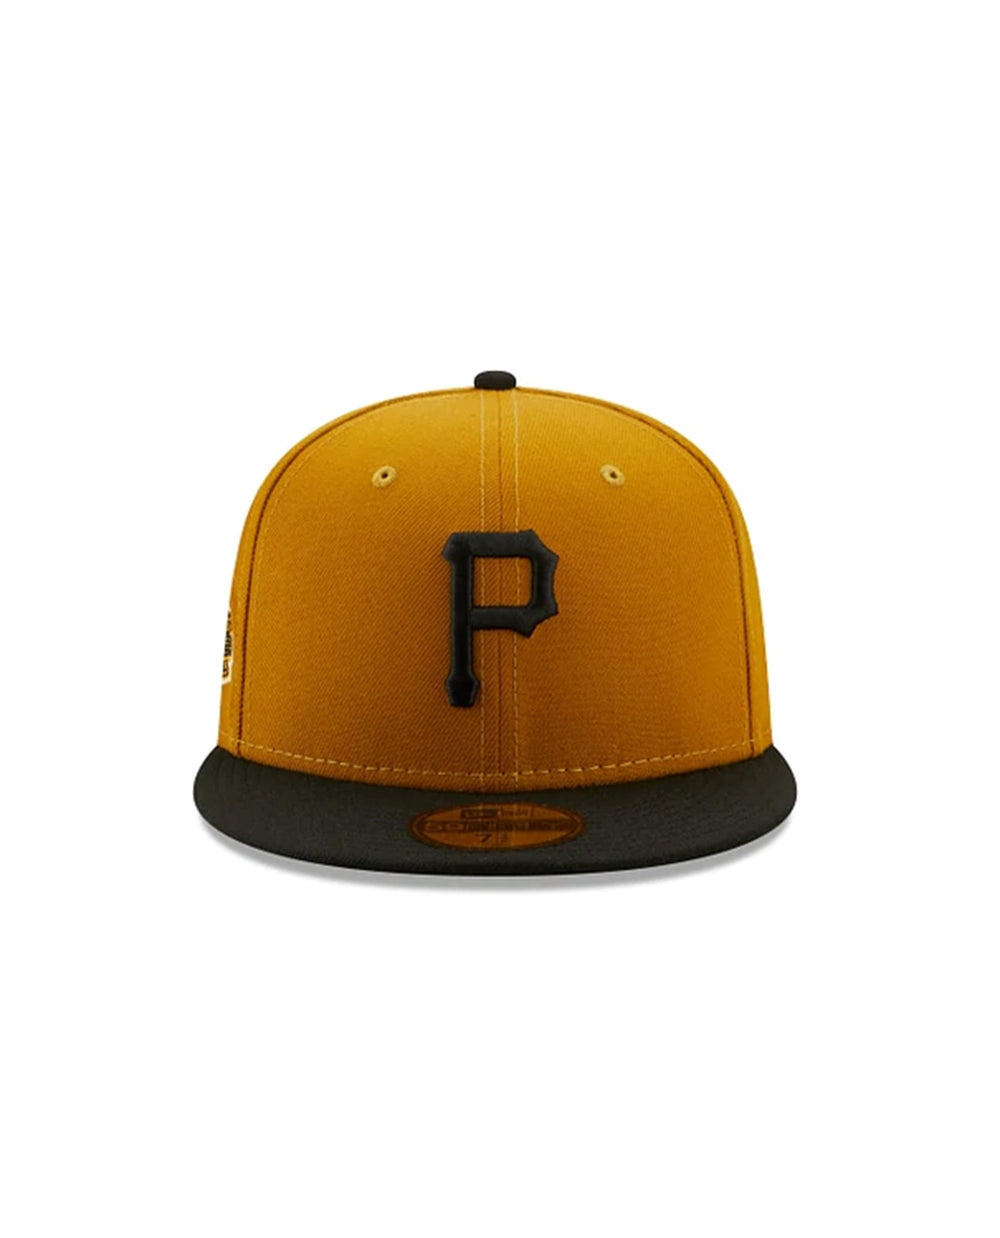 Nike Pittsburgh Pirates Athletic Black Baseball MLB T Shirt Size